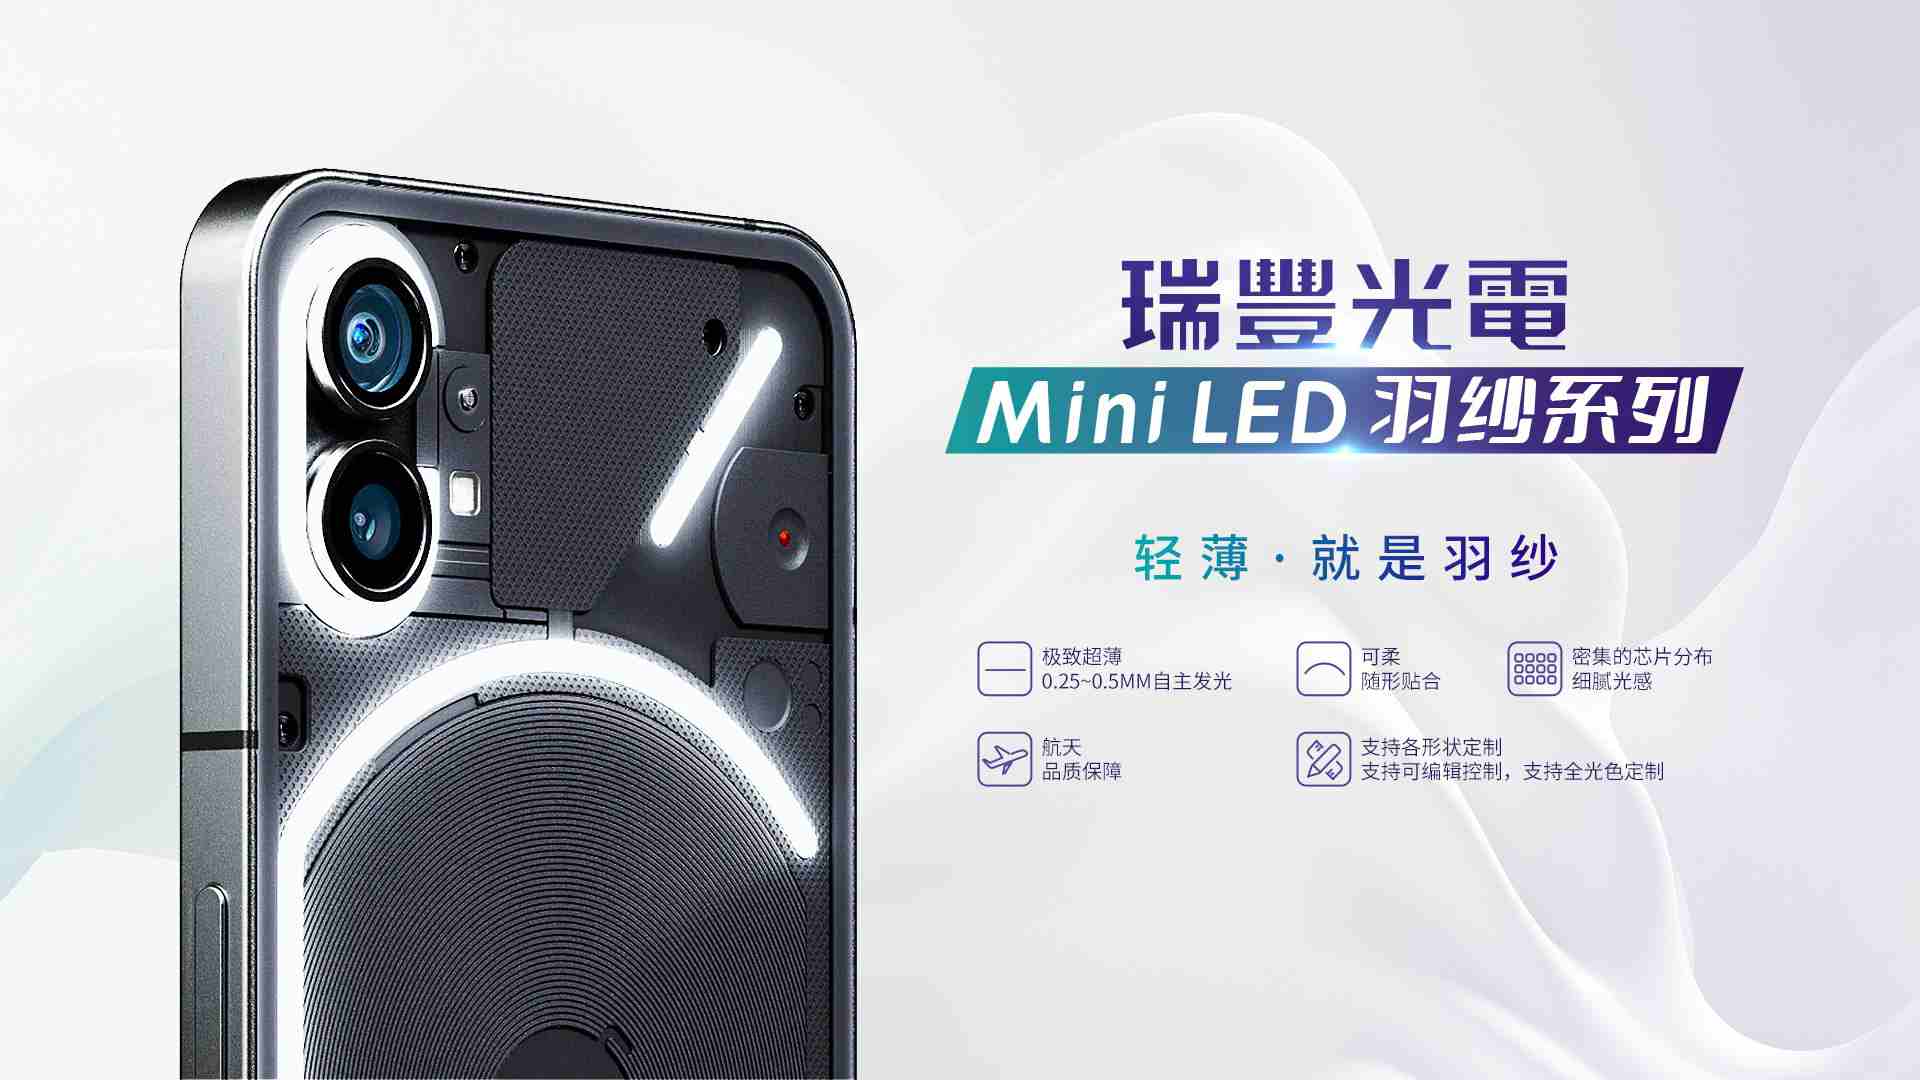 瑞丰光电 Mini LED